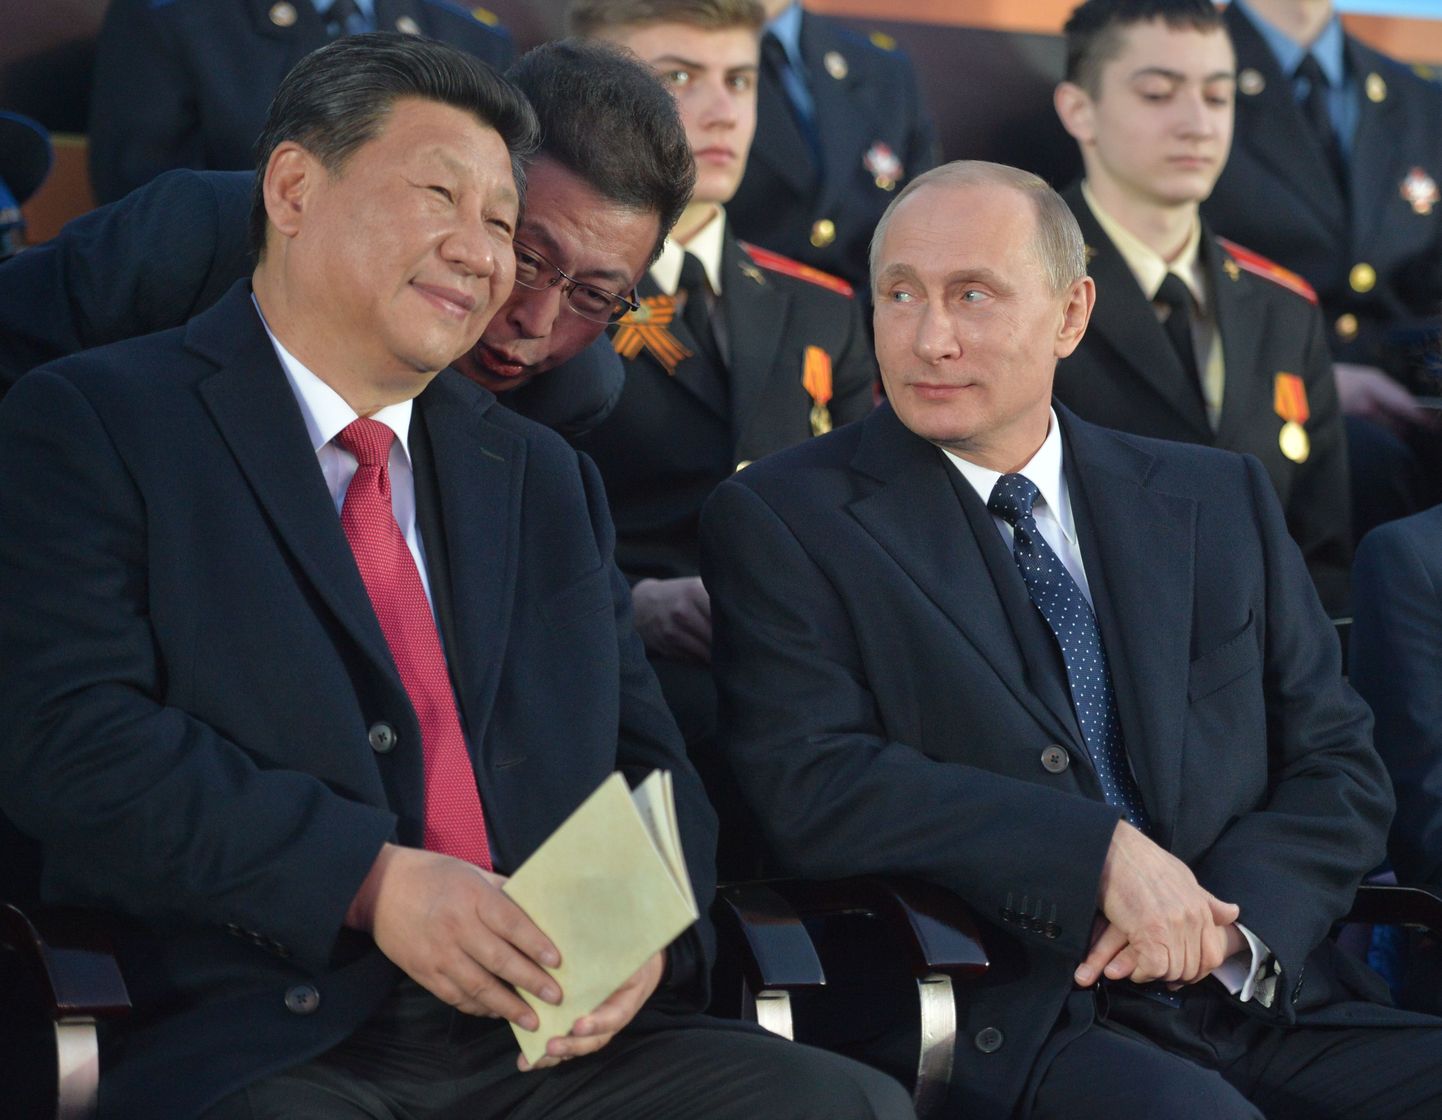 Venemaa president Vladimir Putin (paremal) ja Hiina president Xi Jinping (vasakul).